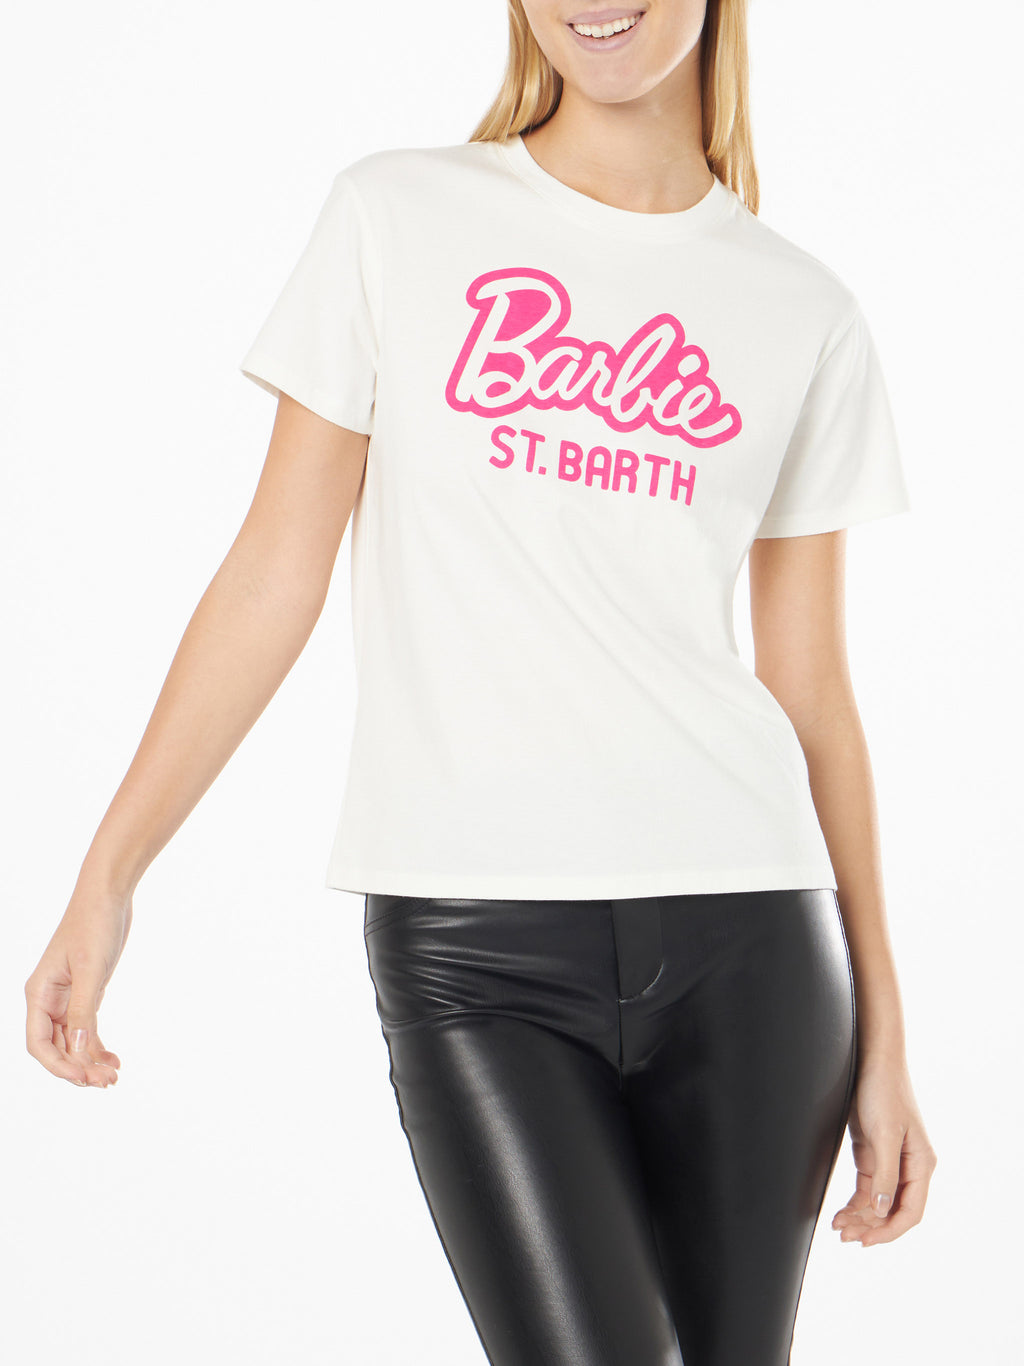 Barbie Valentine Had Me at Hello T-Shirt - シューズ